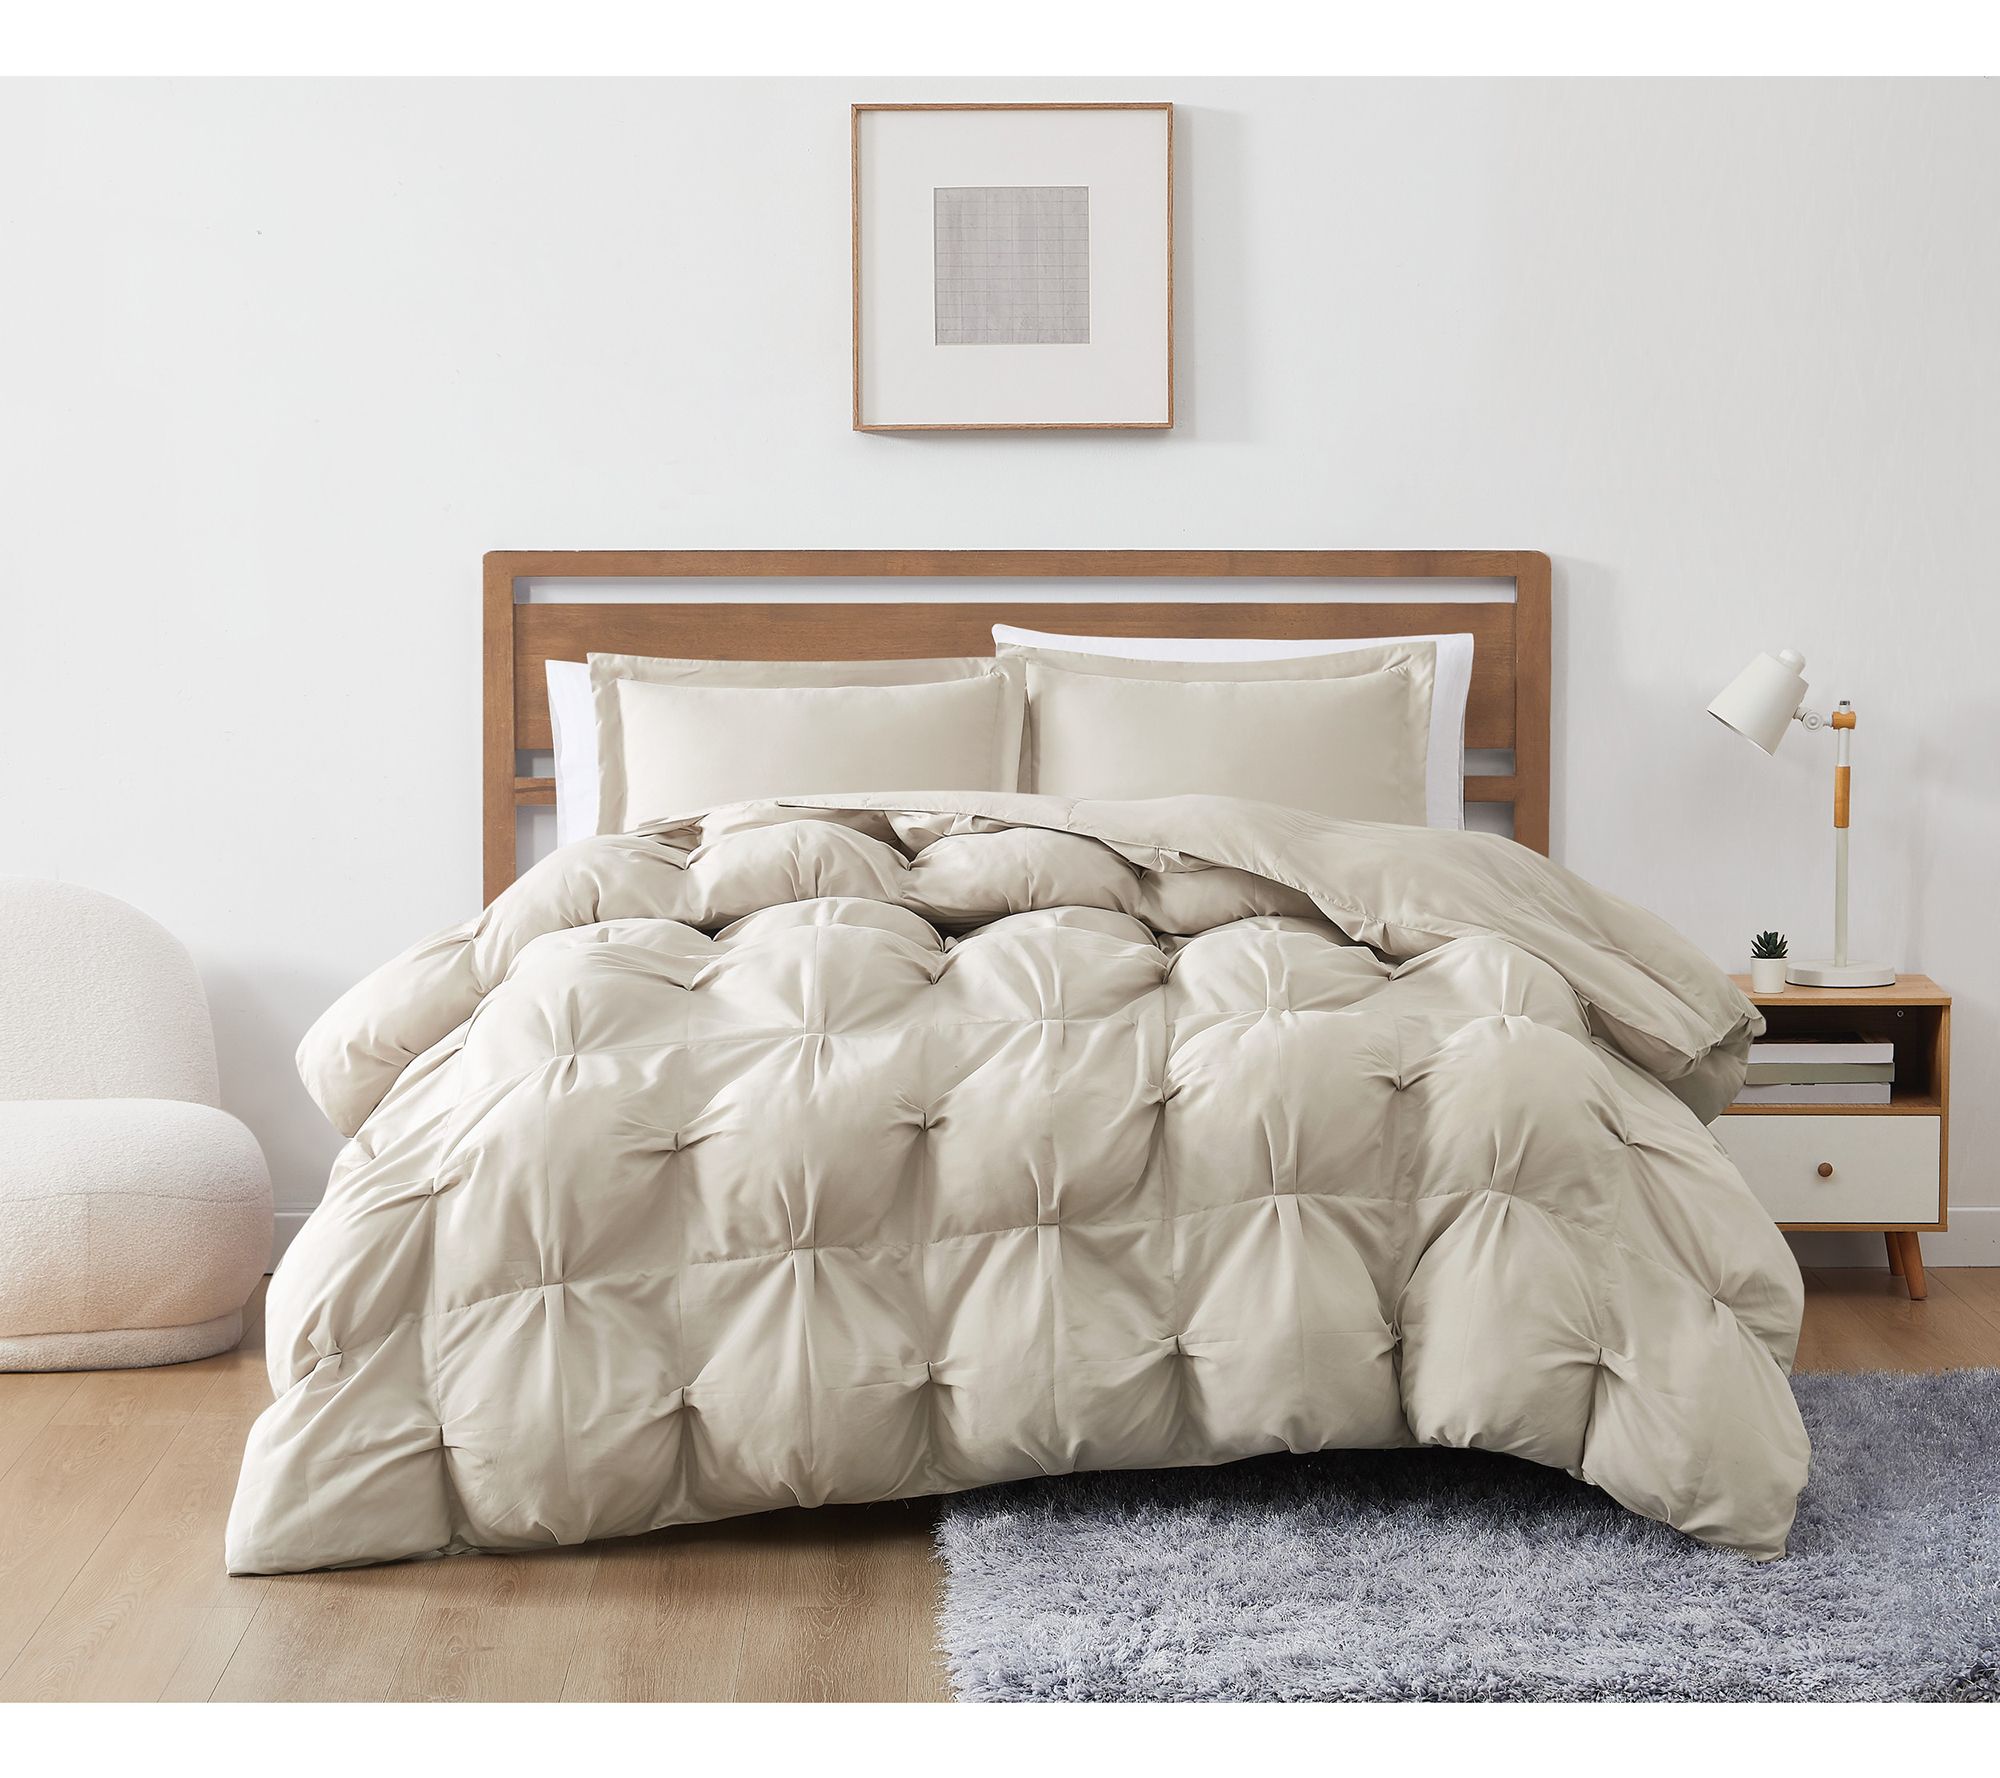 Frye Faux Fur 3 piece Comforter Set Cream/Beige KING for sale